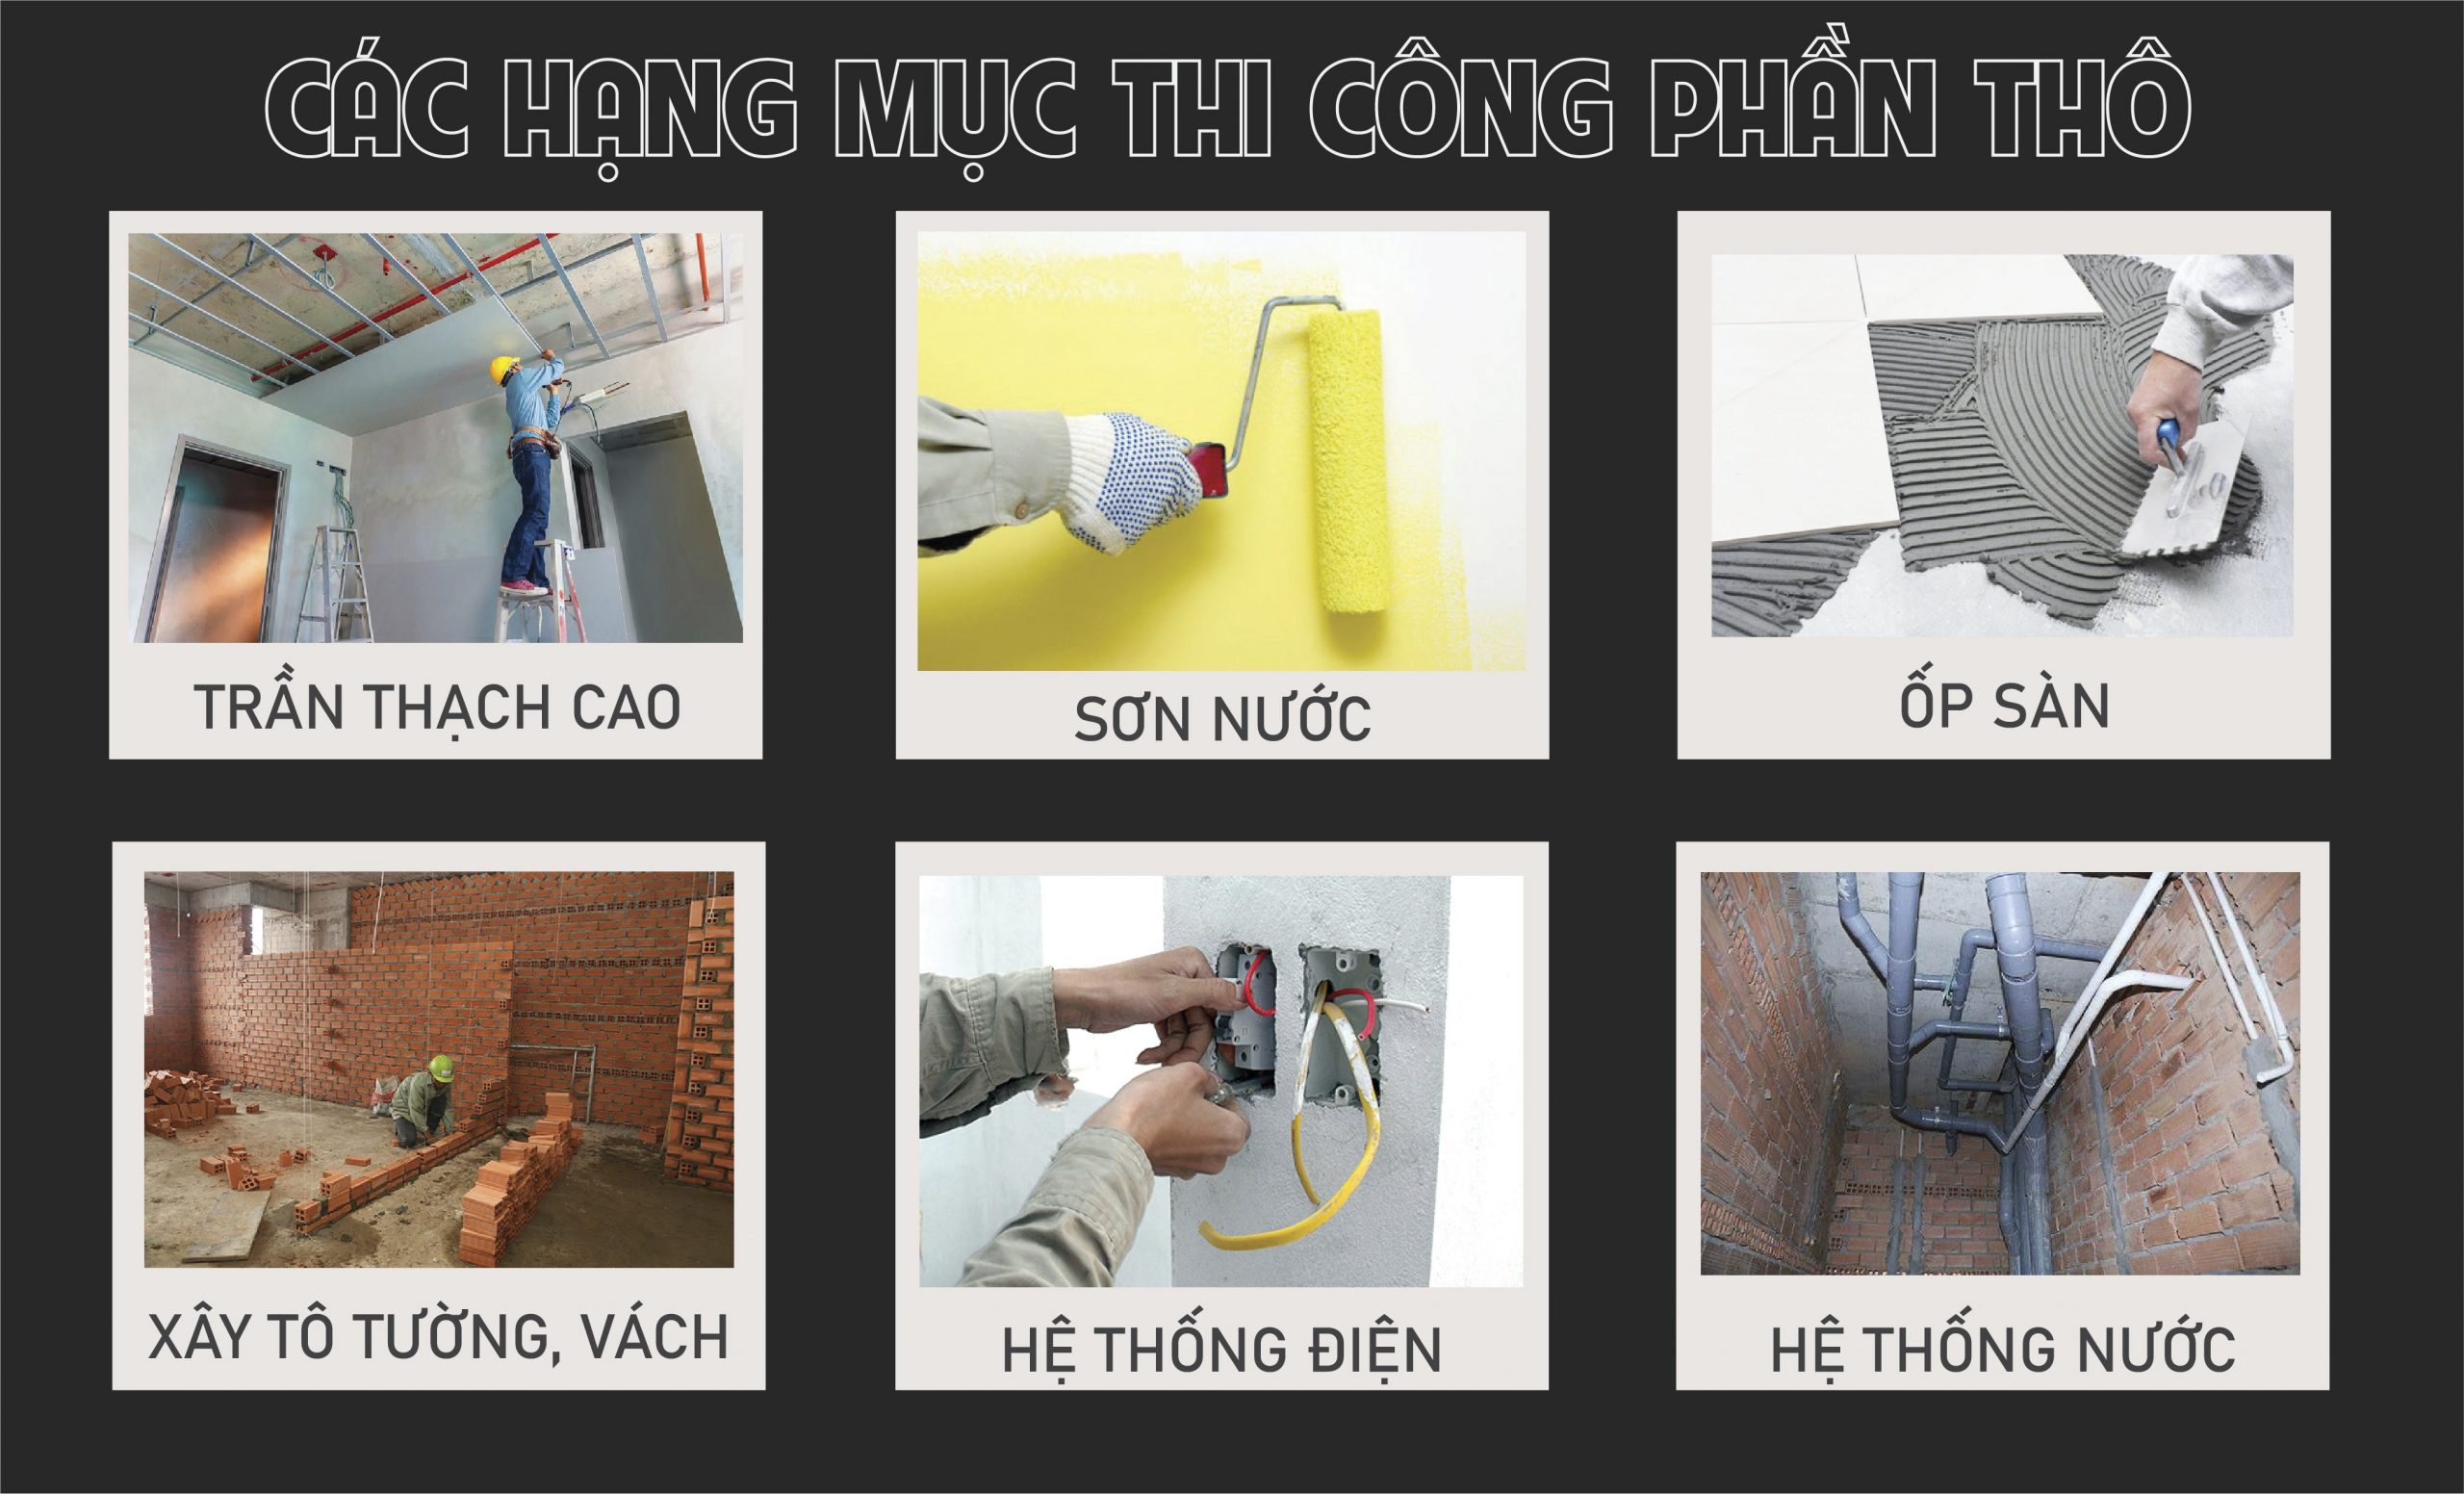 Hang muc phan tho scaled